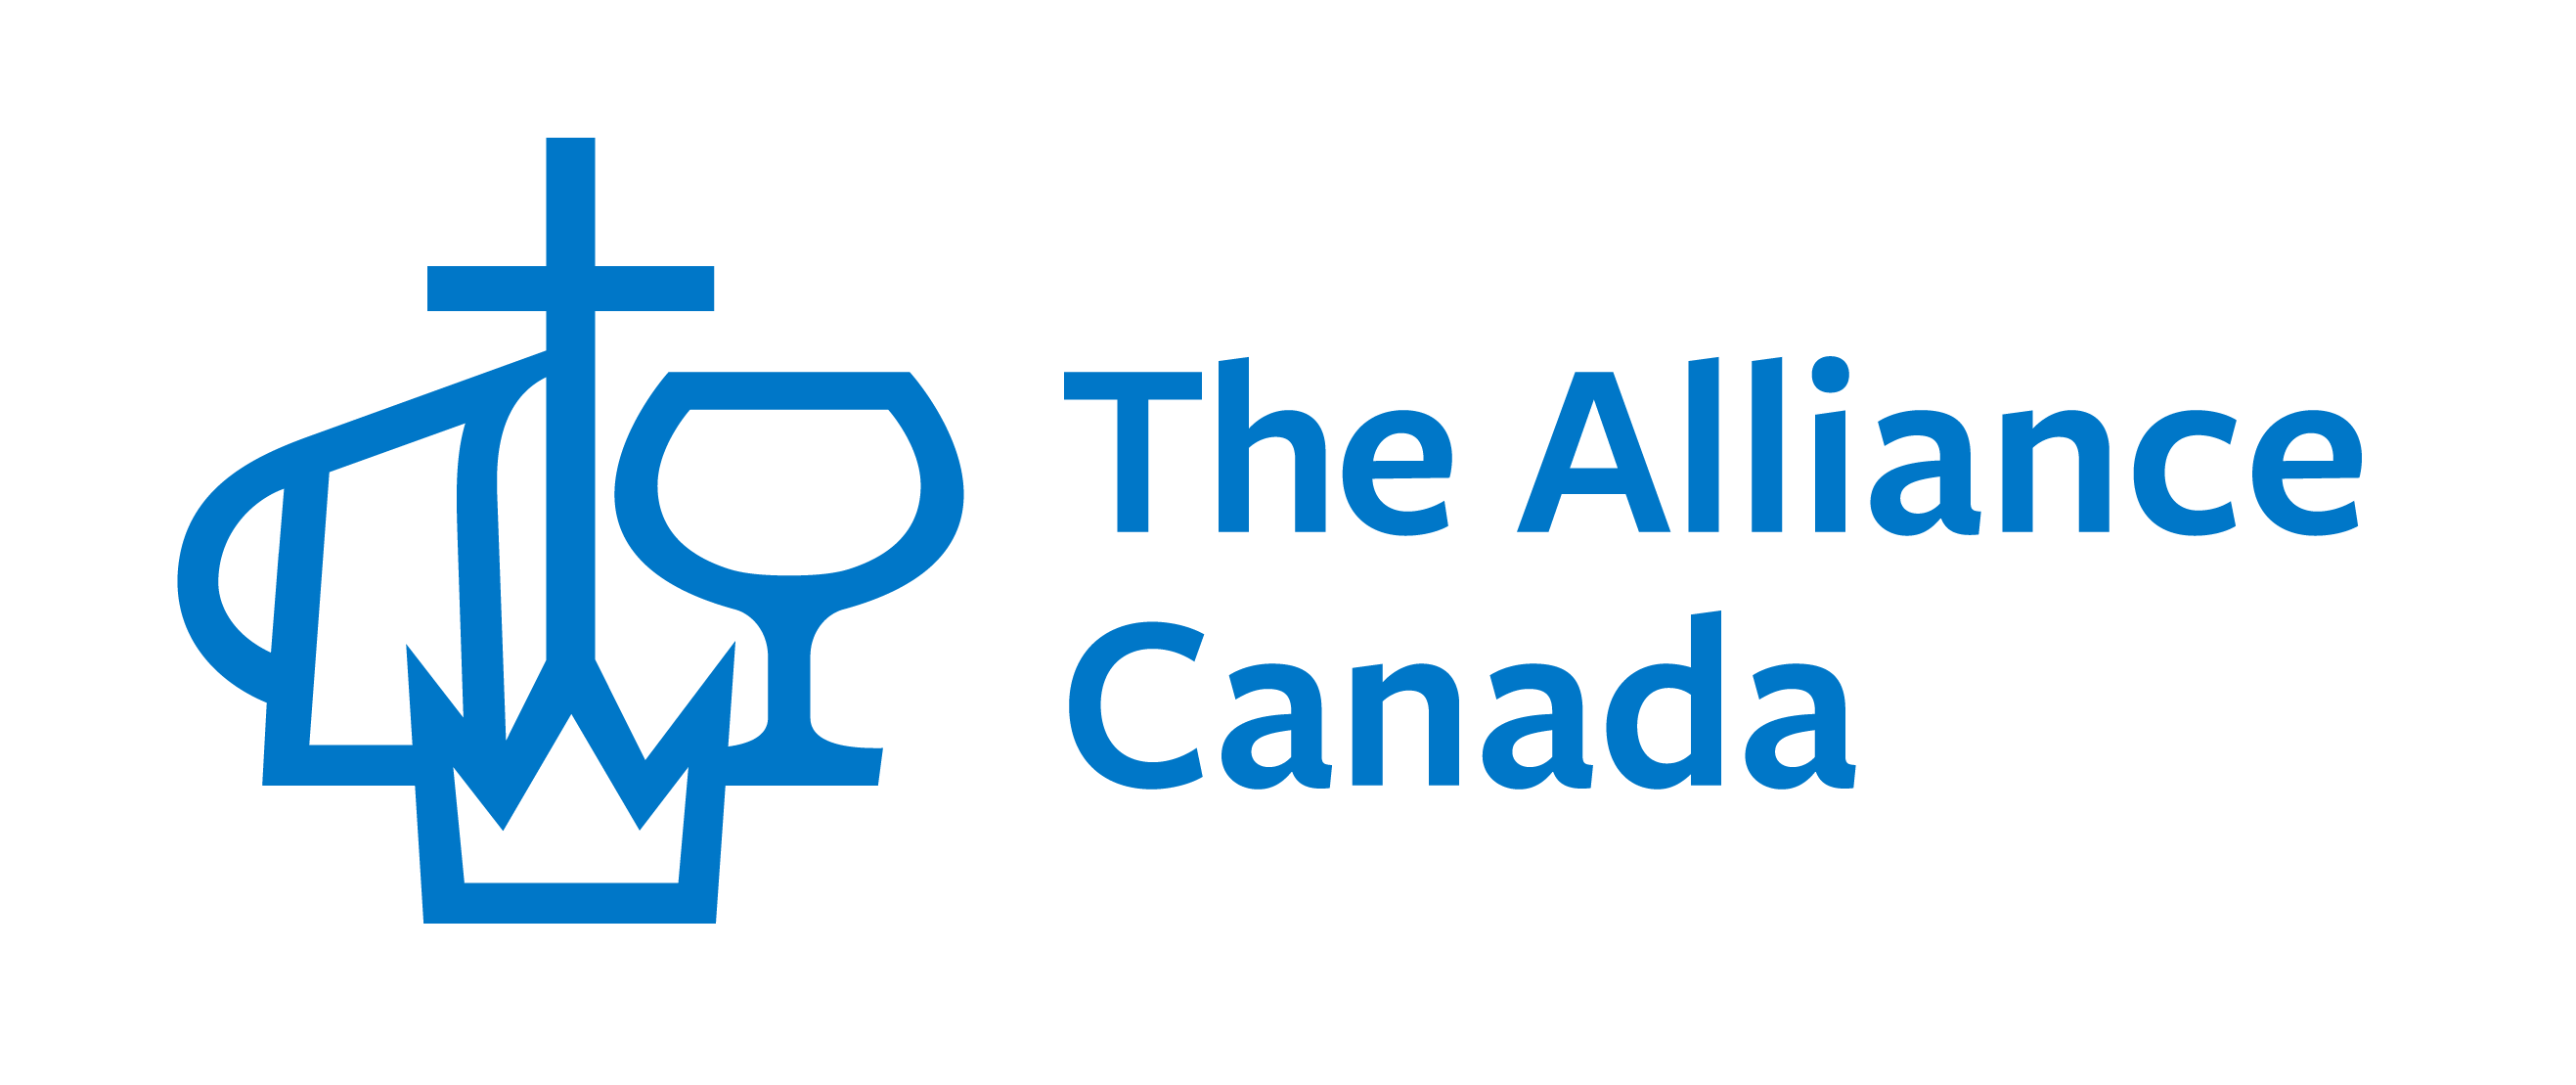 The Alliance Canada Logo design 2021